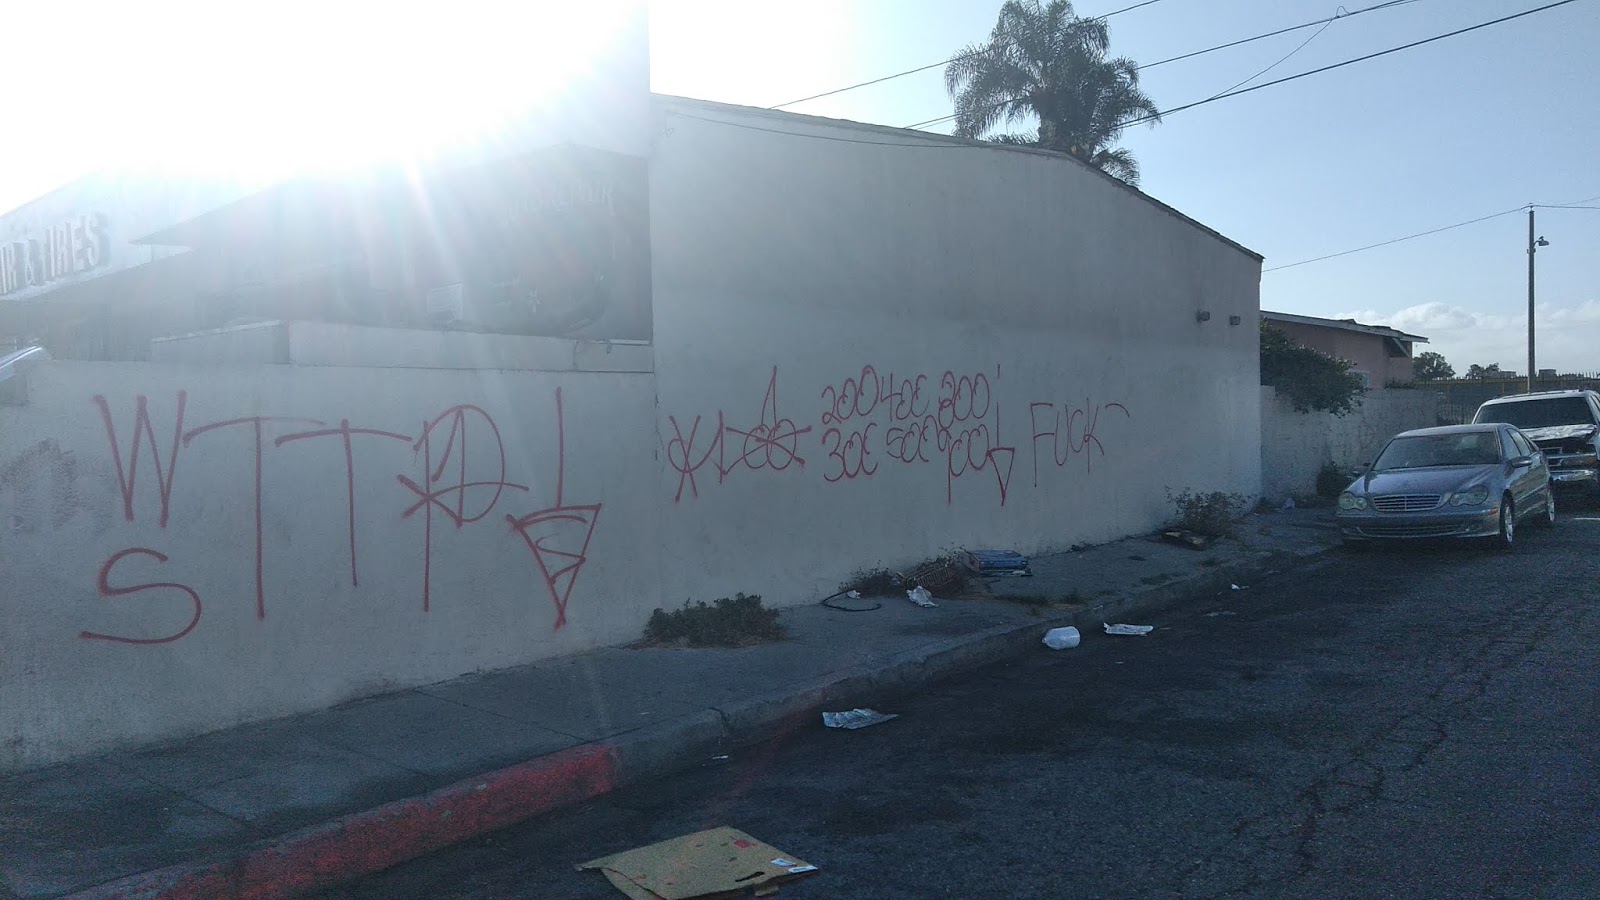 blood piru brims gangs graffiti: Tree top piru ( compton )